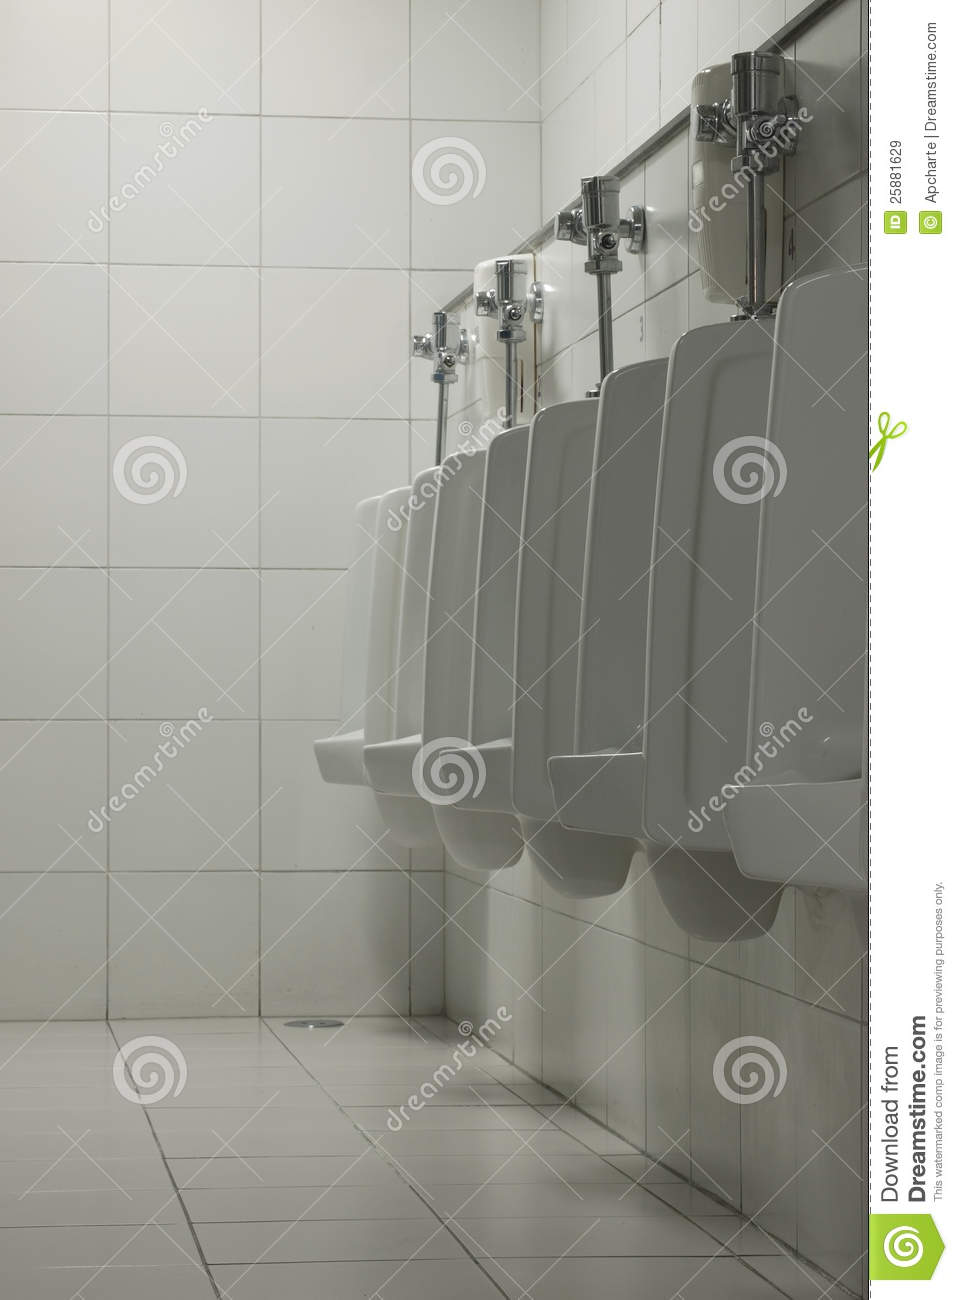 The Men Restroom With The Sanitary Wares Mr No Pr No 0 516 0